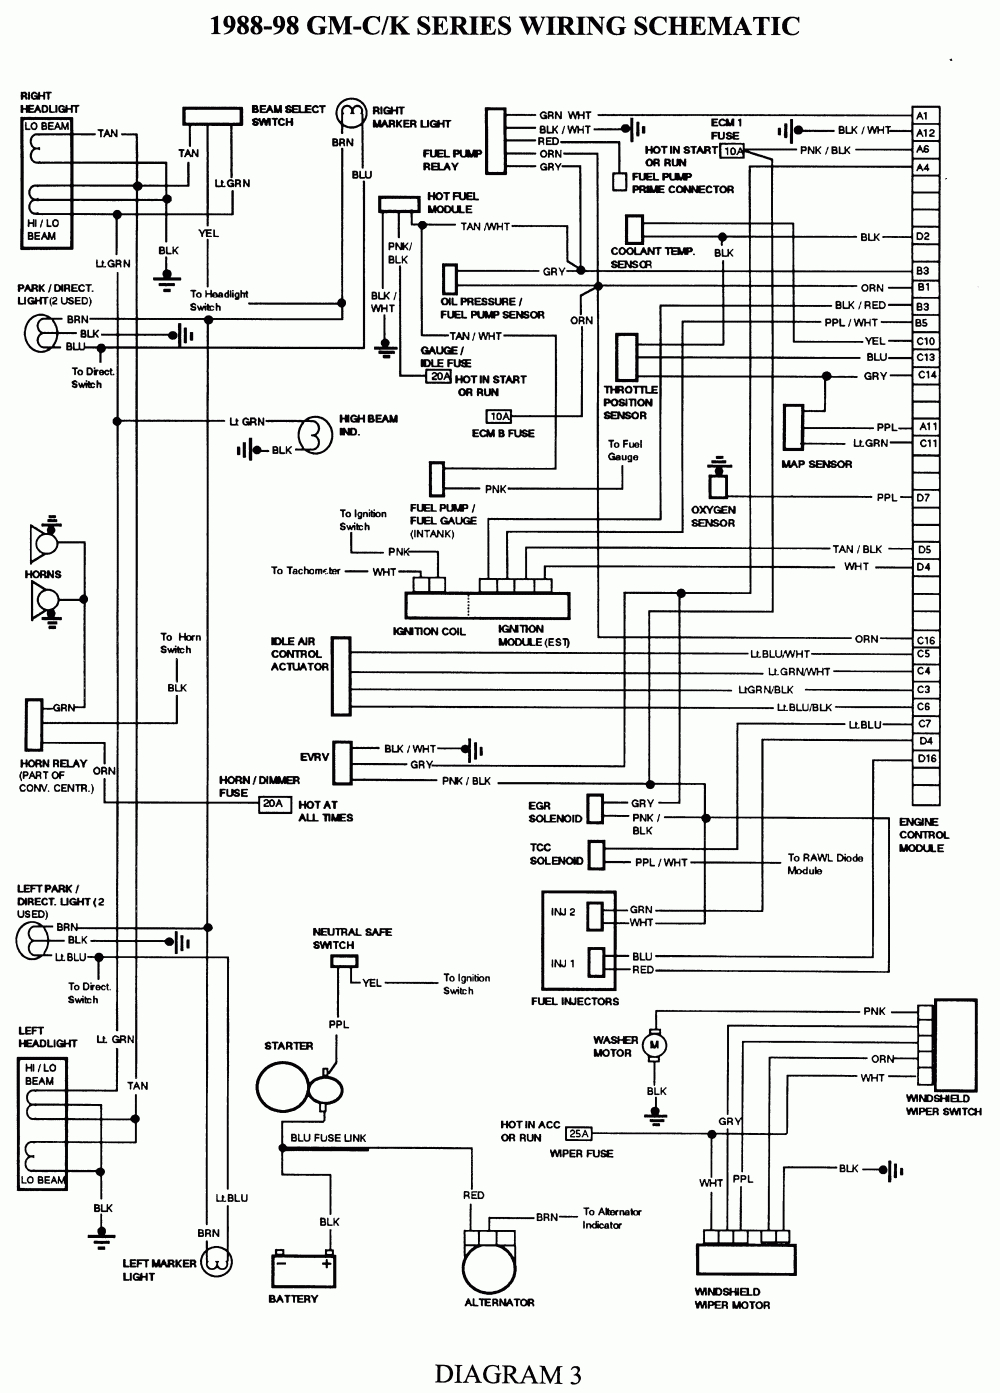 Repair Guides | Wiring Diagrams | Wiring Diagrams | Autozone - 1990 Chevy Truck Wiring Diagram